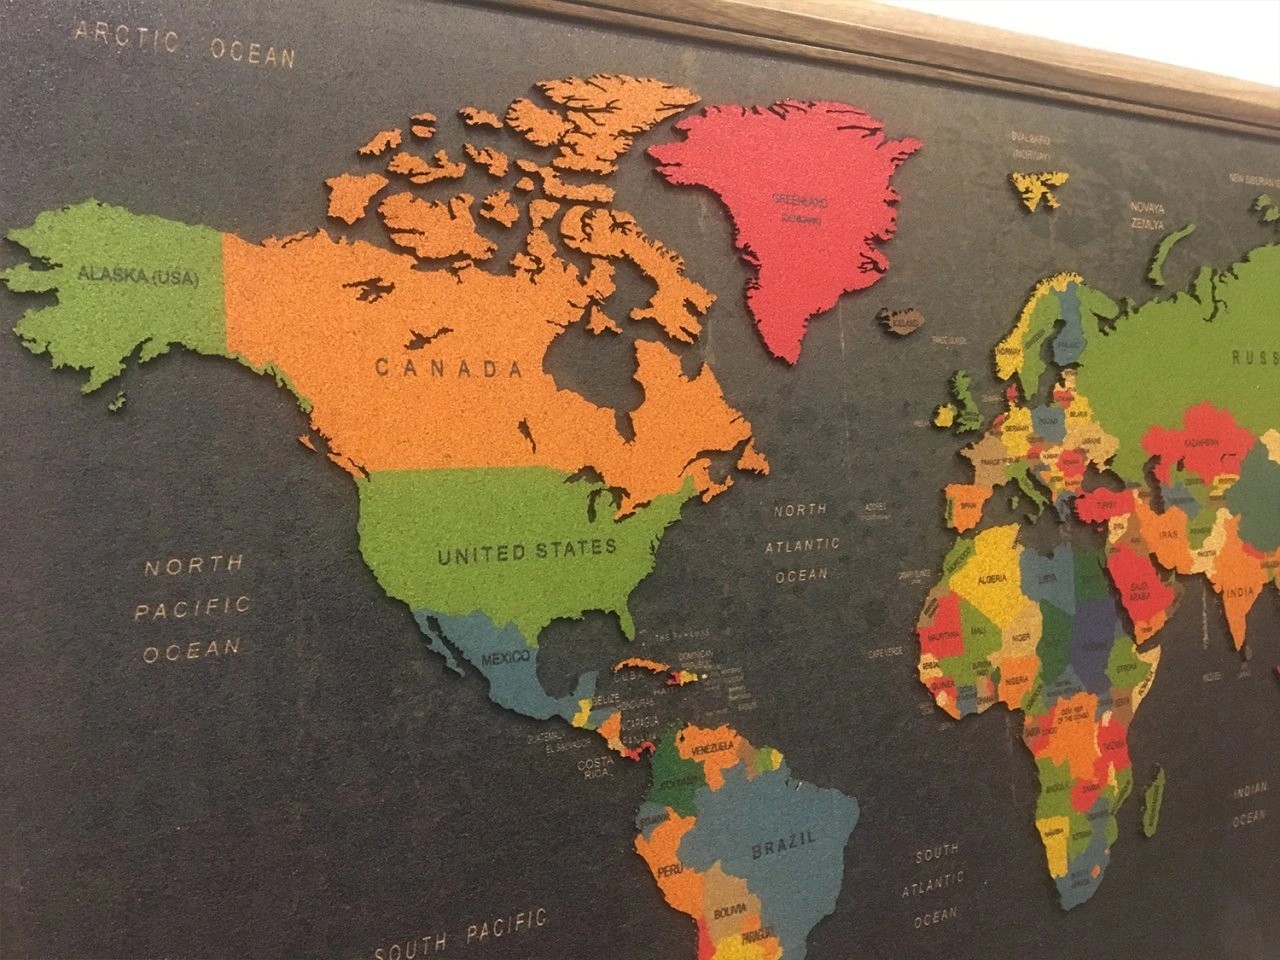 405 - 3D Mantar Dünya Haritası (Renkli)